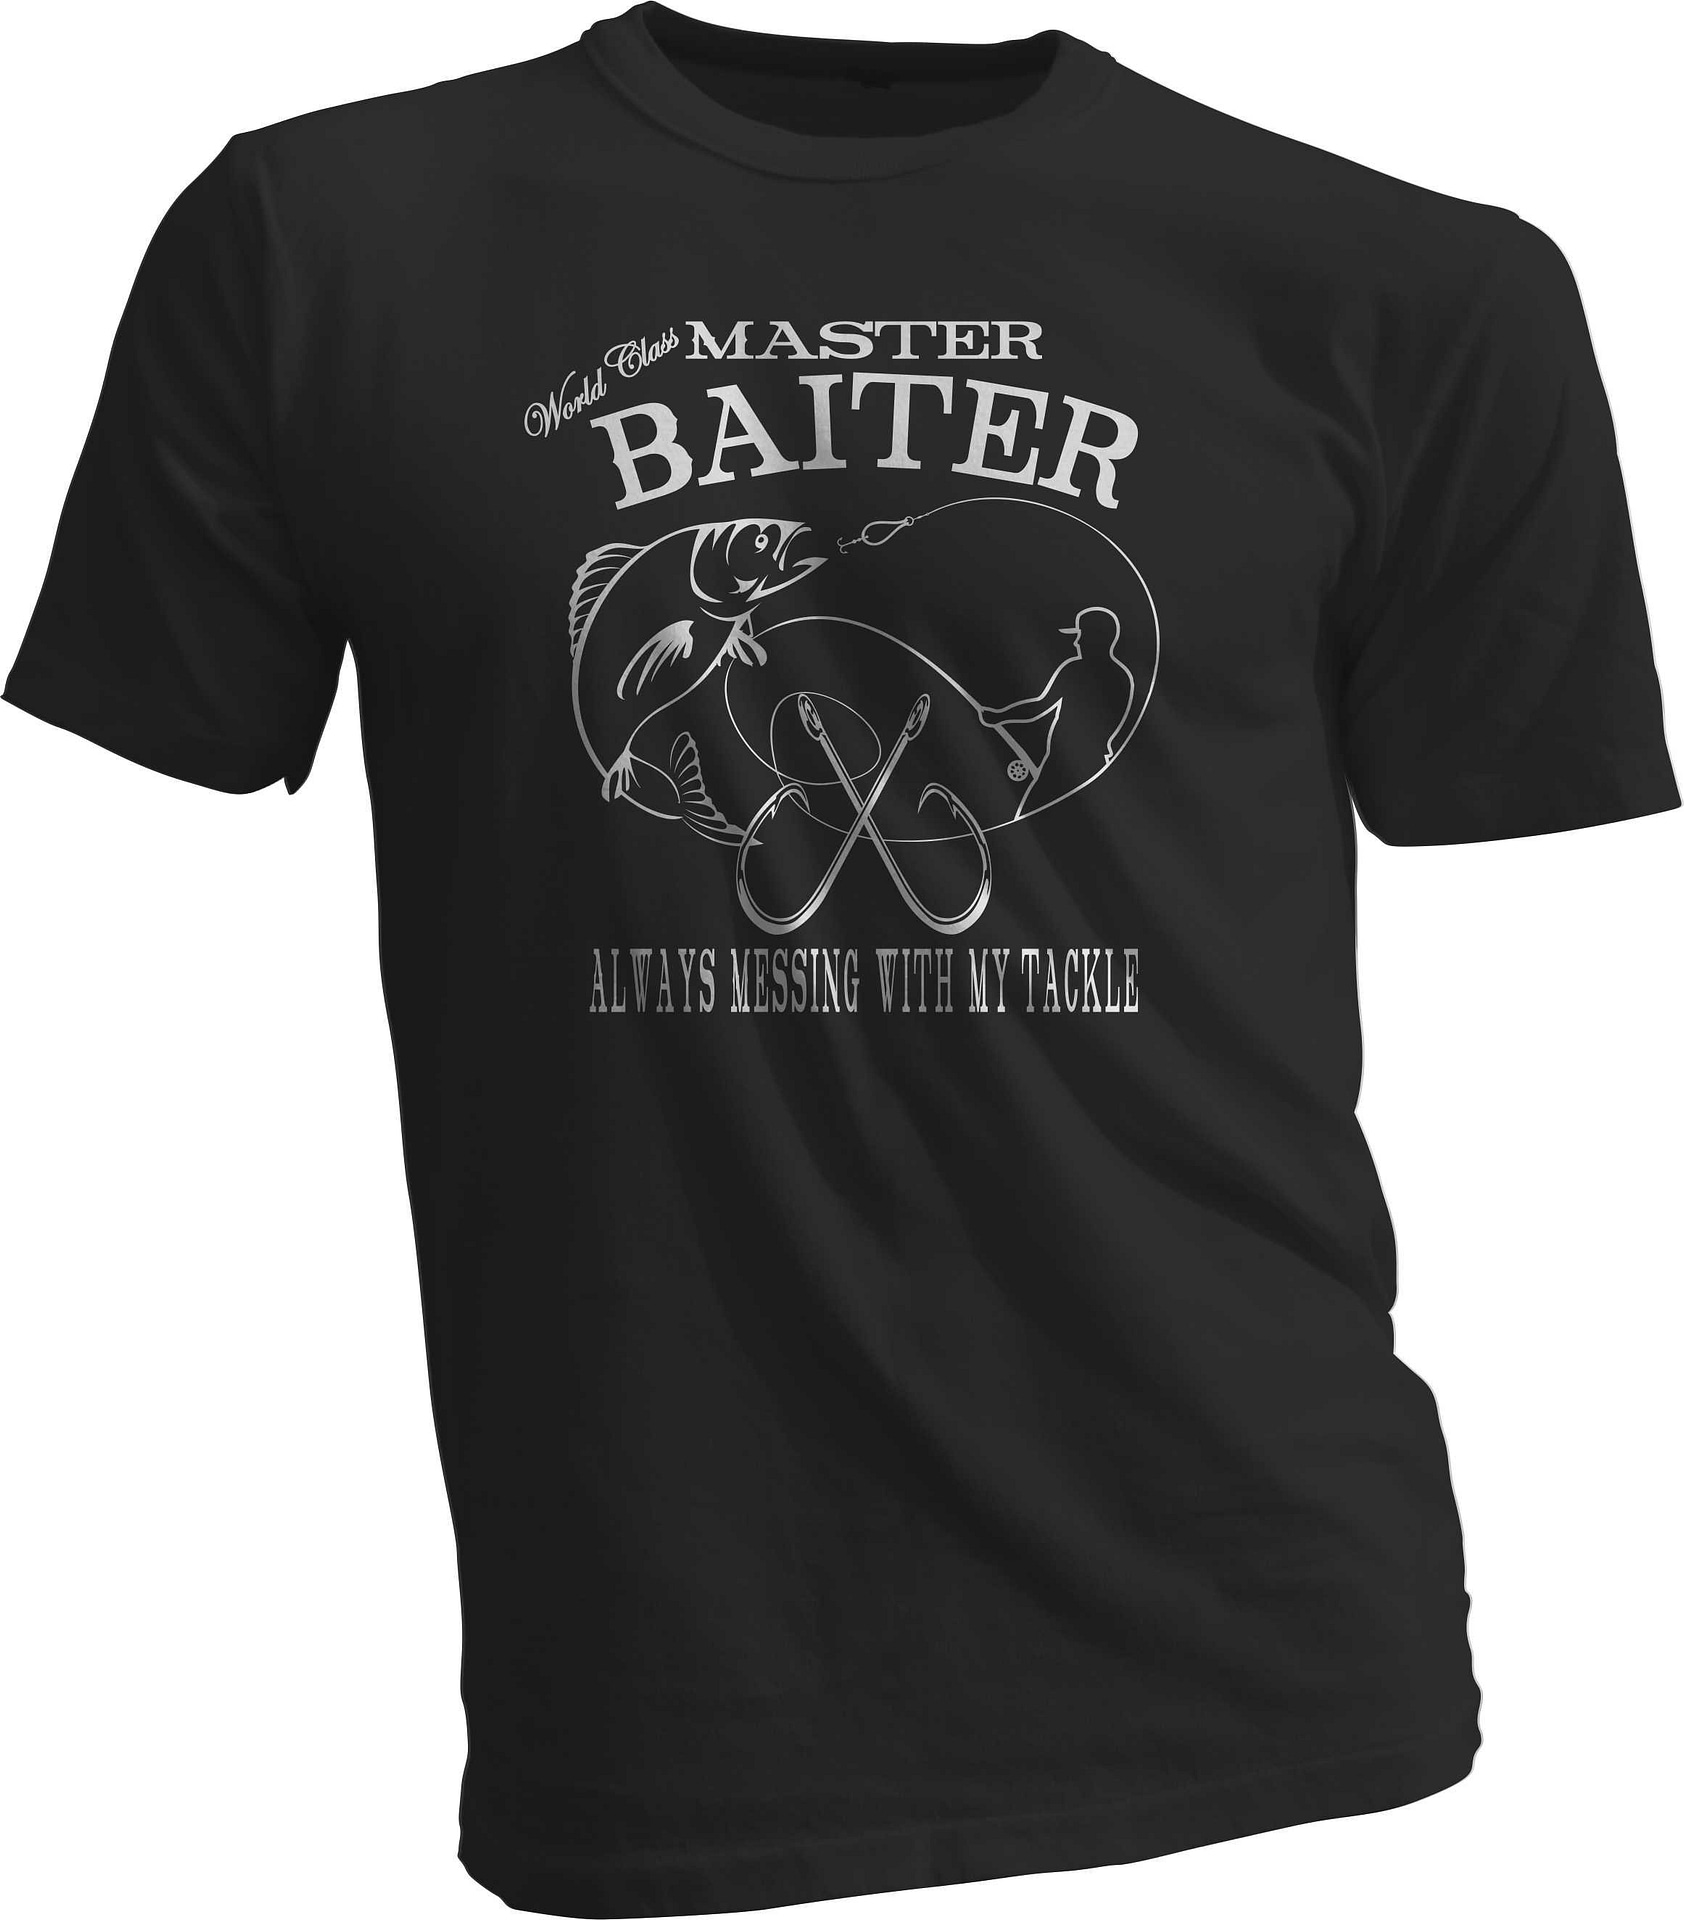 Fishing Gifts for Men | Master Baiter Shirt for Man | Bass Fishing Tshirt - Dad Christmas Gifts - Fishy Tee T-Shirt, Husband Shirt, Dad Gift